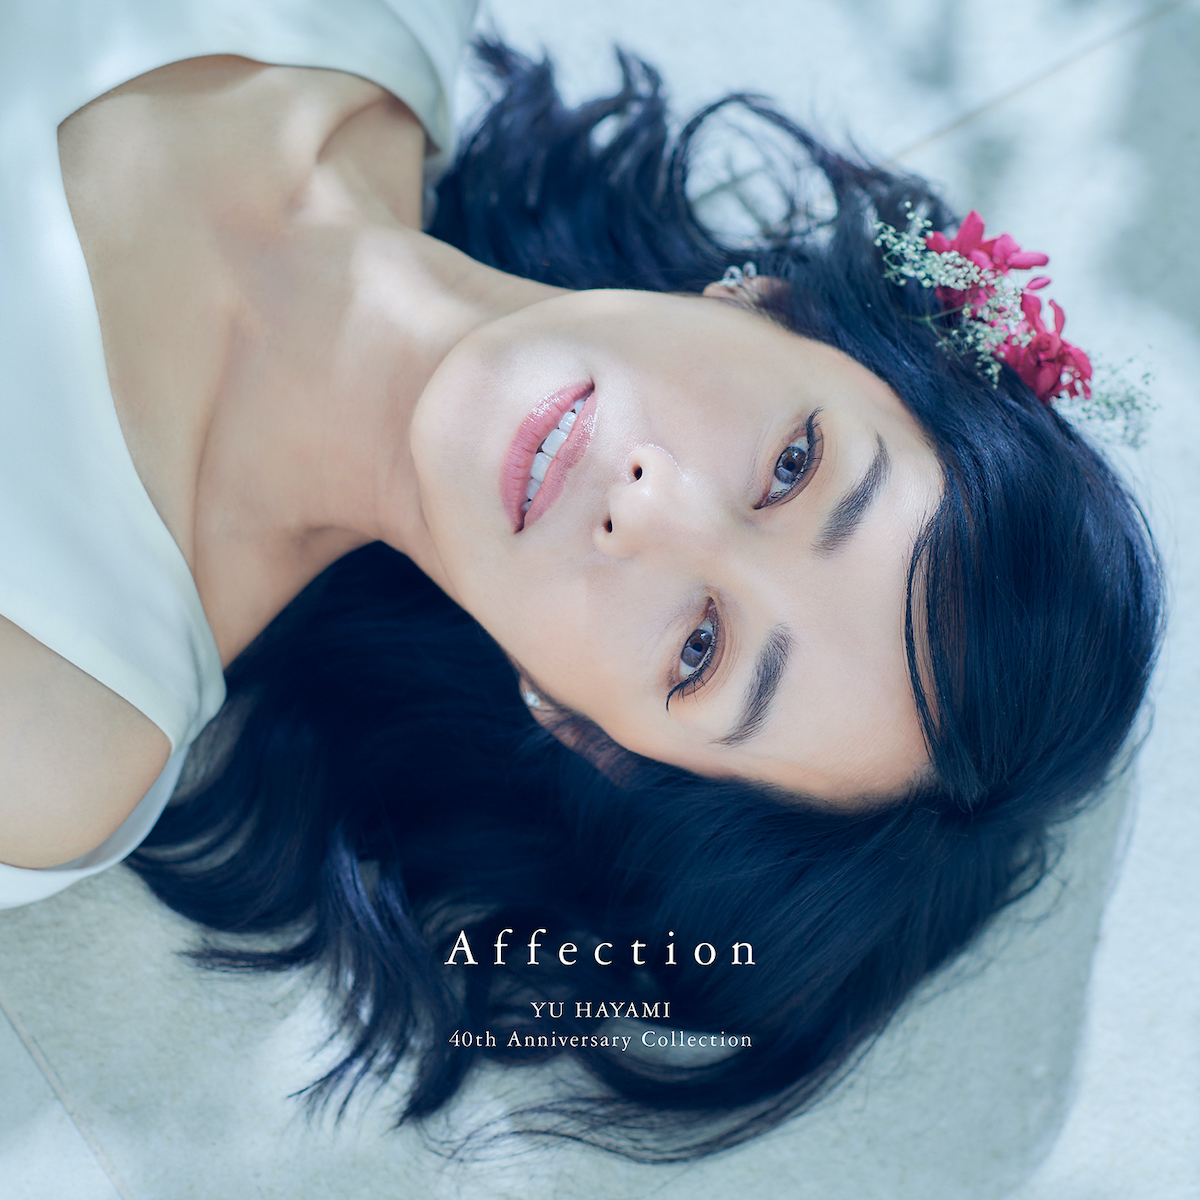 『Affection ~YU HAYAMI 40thAnniversary Collection~』